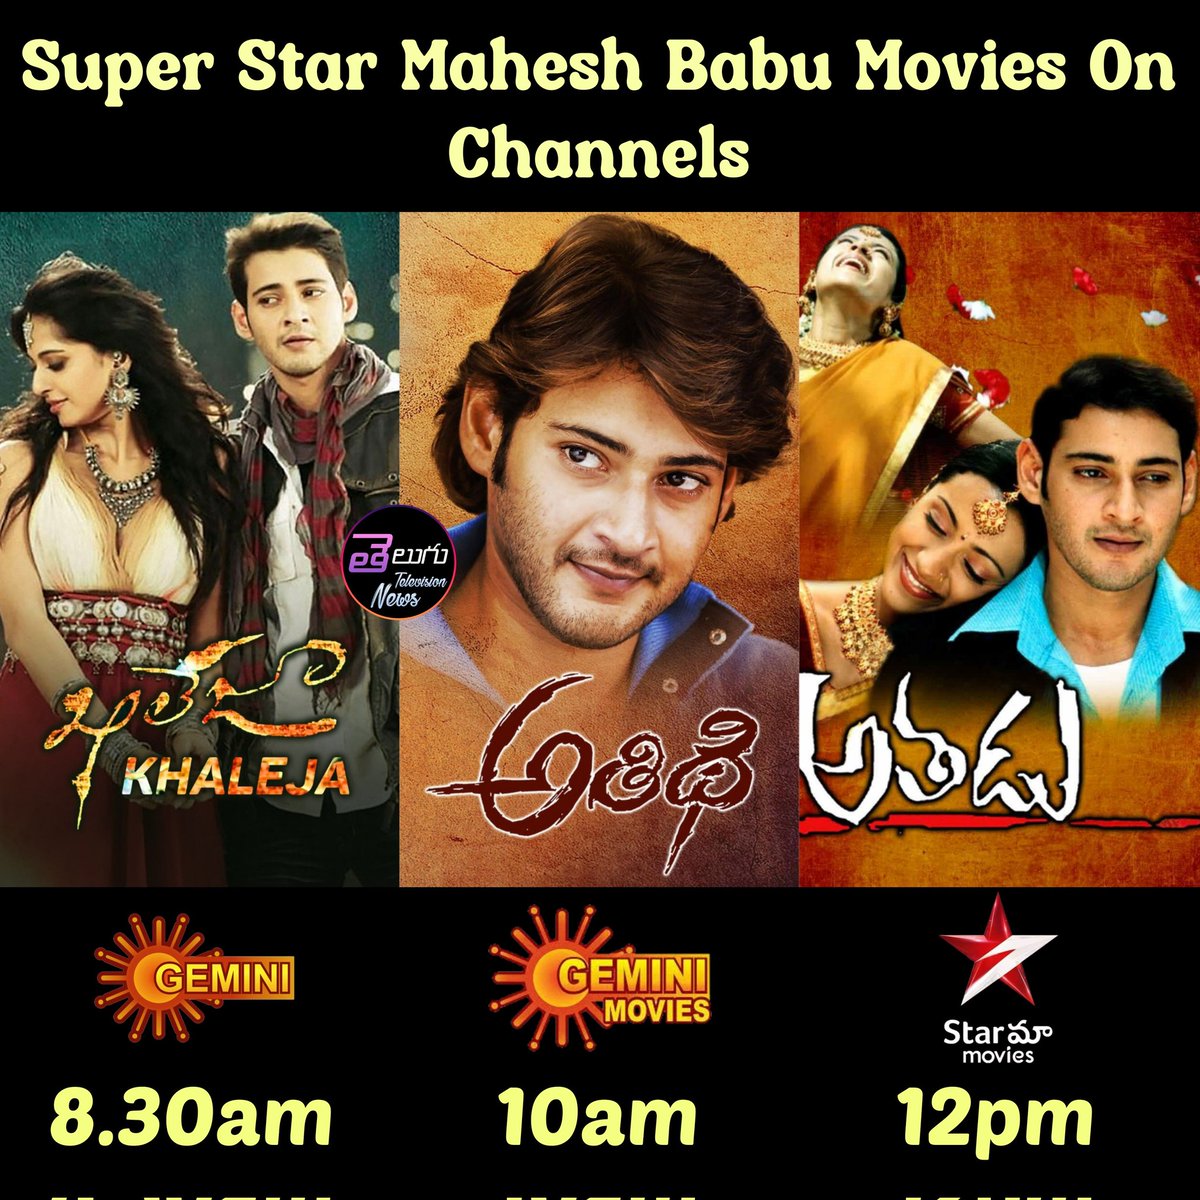 Superstar #MaheshBabu Movies Today on Channels 

#Khaleja at 8:30am on #GeminiTV

#Athidhi at 10am on #GeminiMovies

#Athadu at 12pm on #StarMaaMovies

#MaheshBabu #AnushkaShetty #AmritaRao #TrishaKrishnan